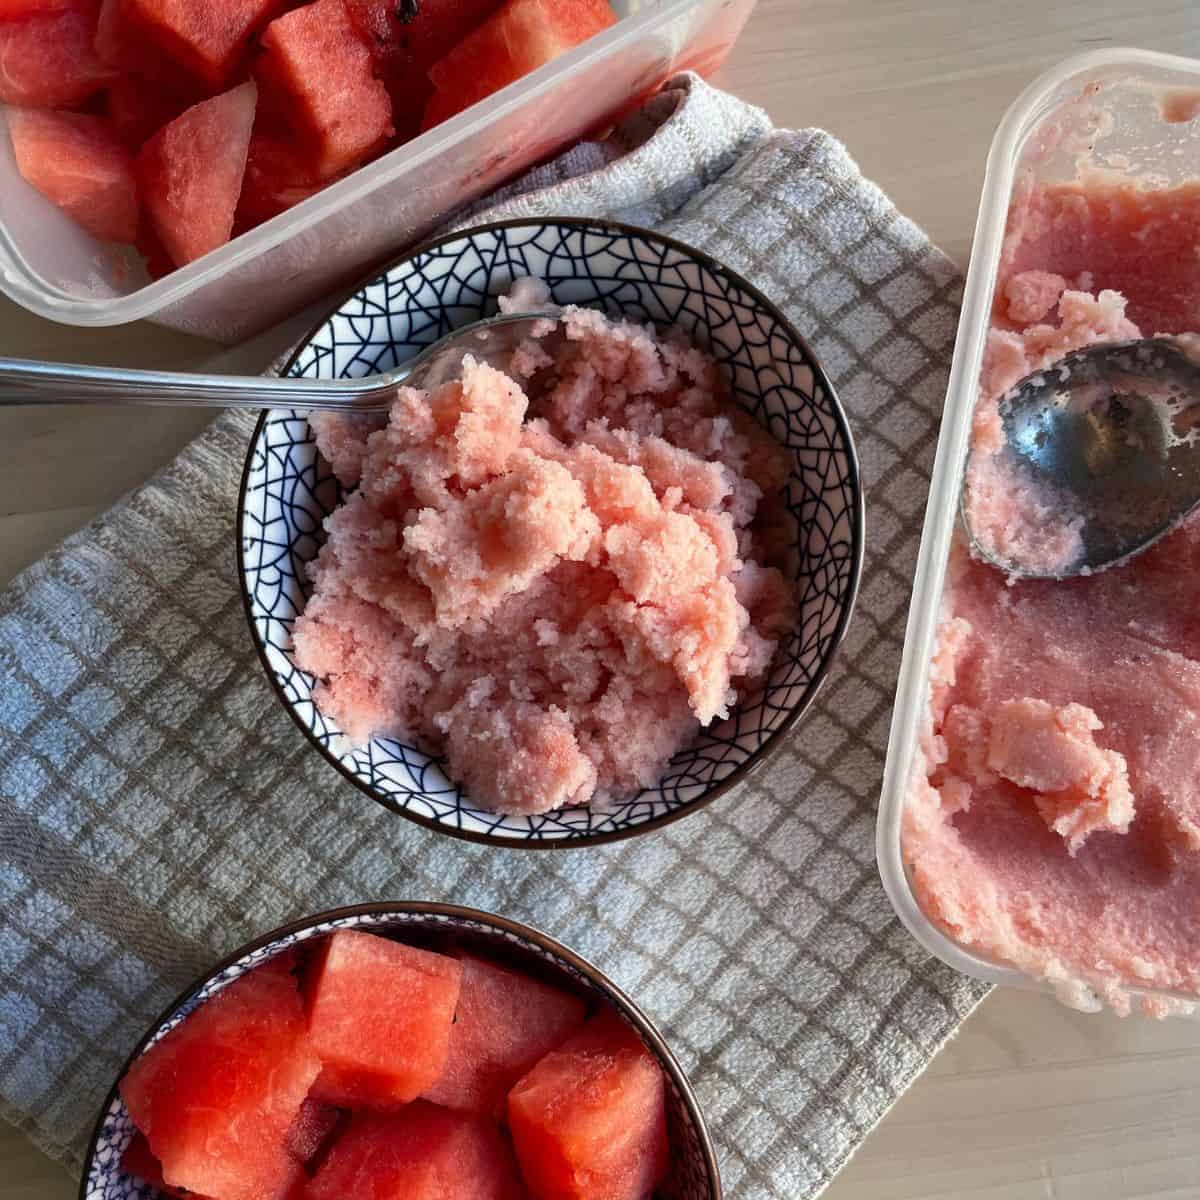 How to make watermelon ice cream